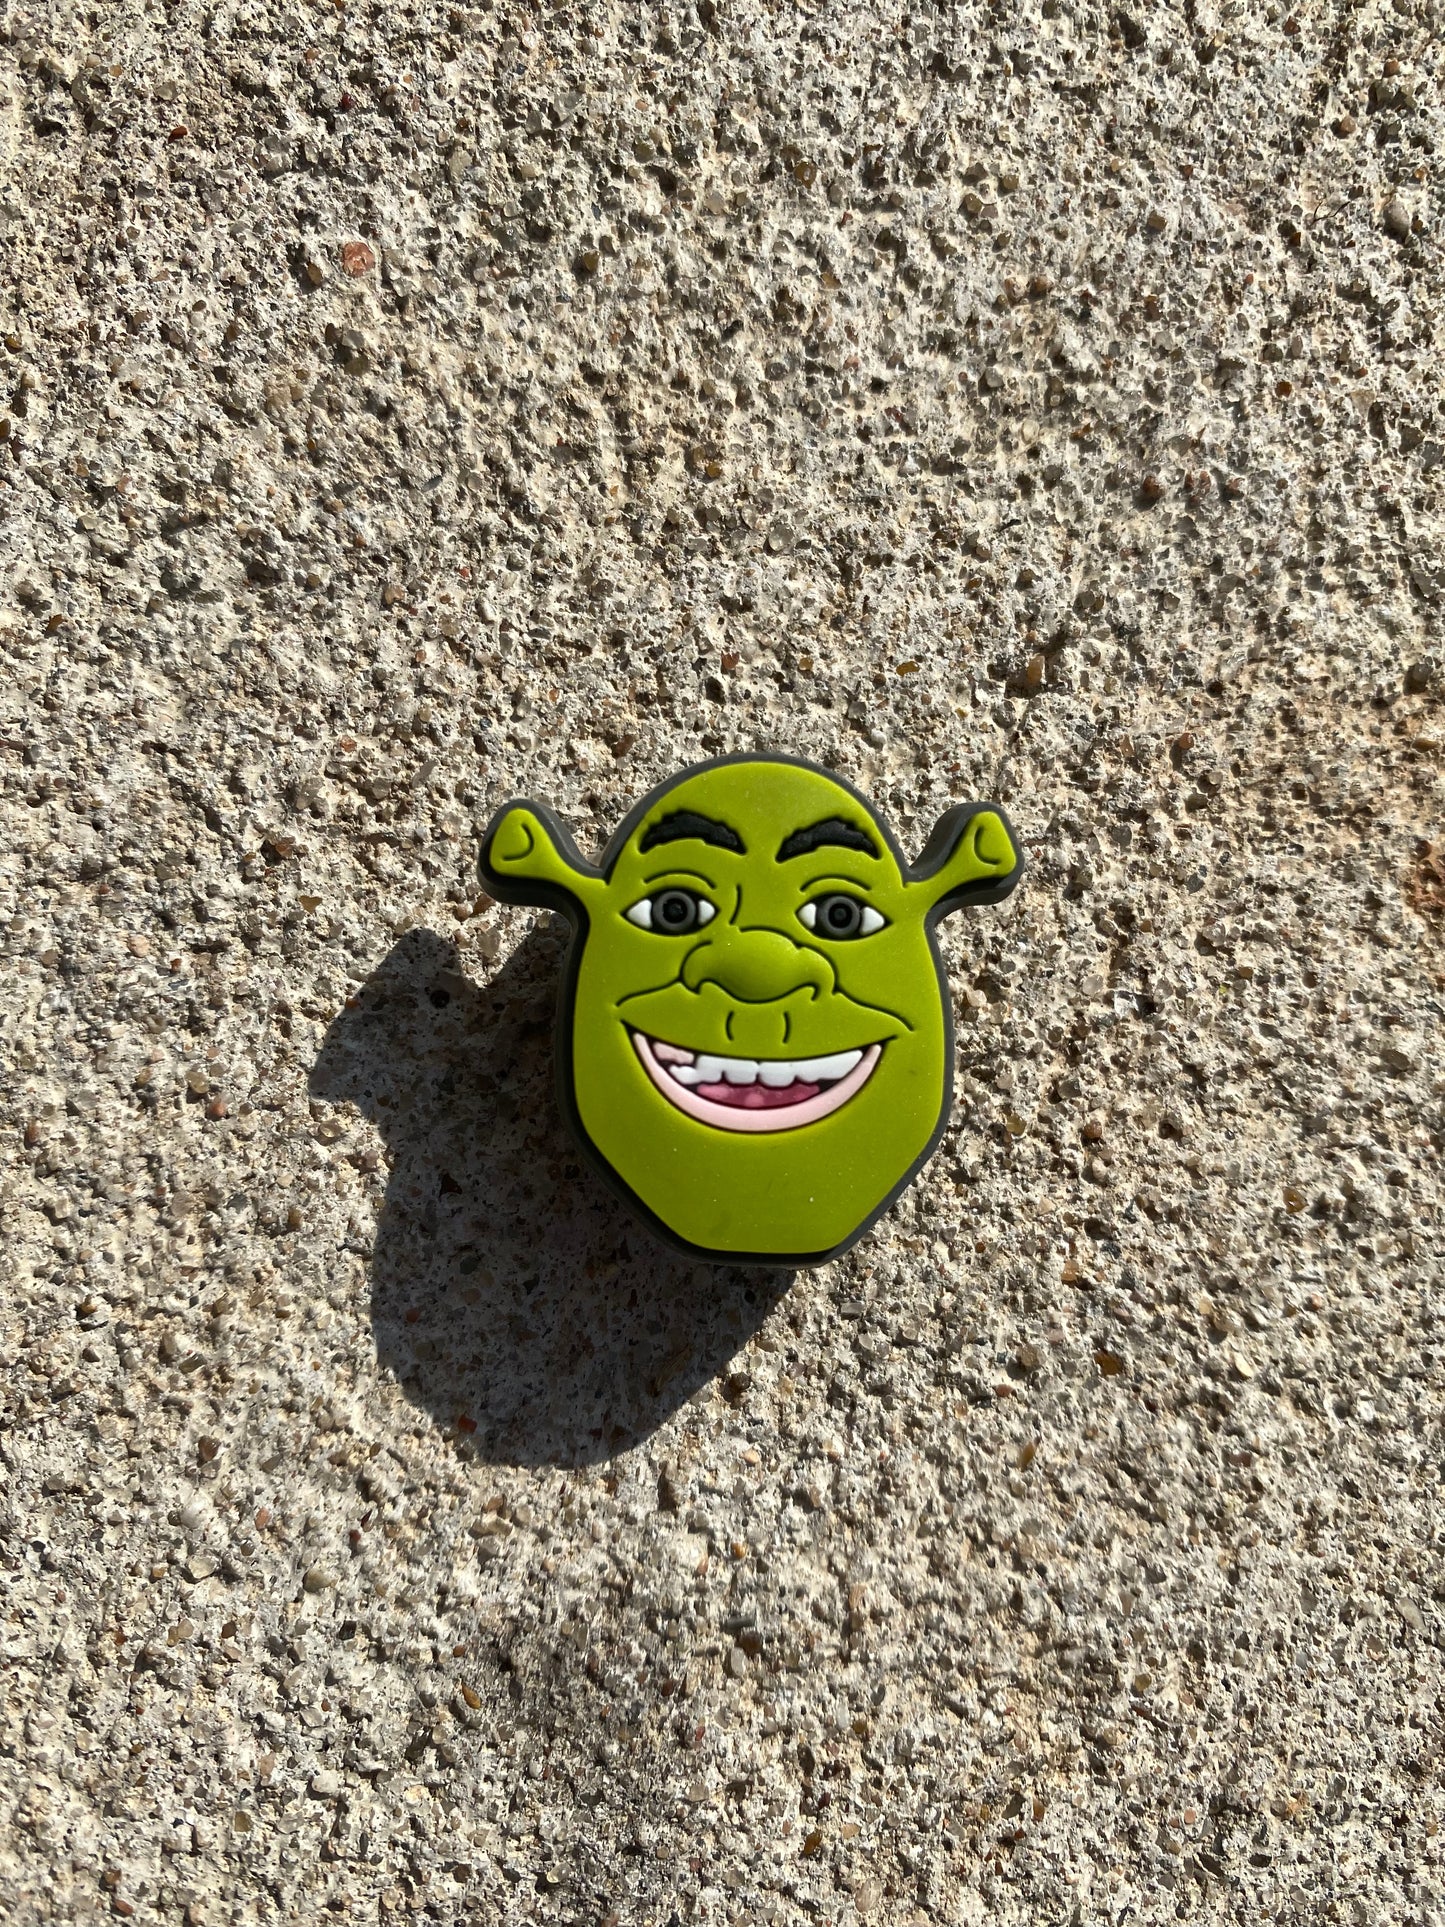 Shrek Jibbitz Crocs, Shrek Crocs Charms